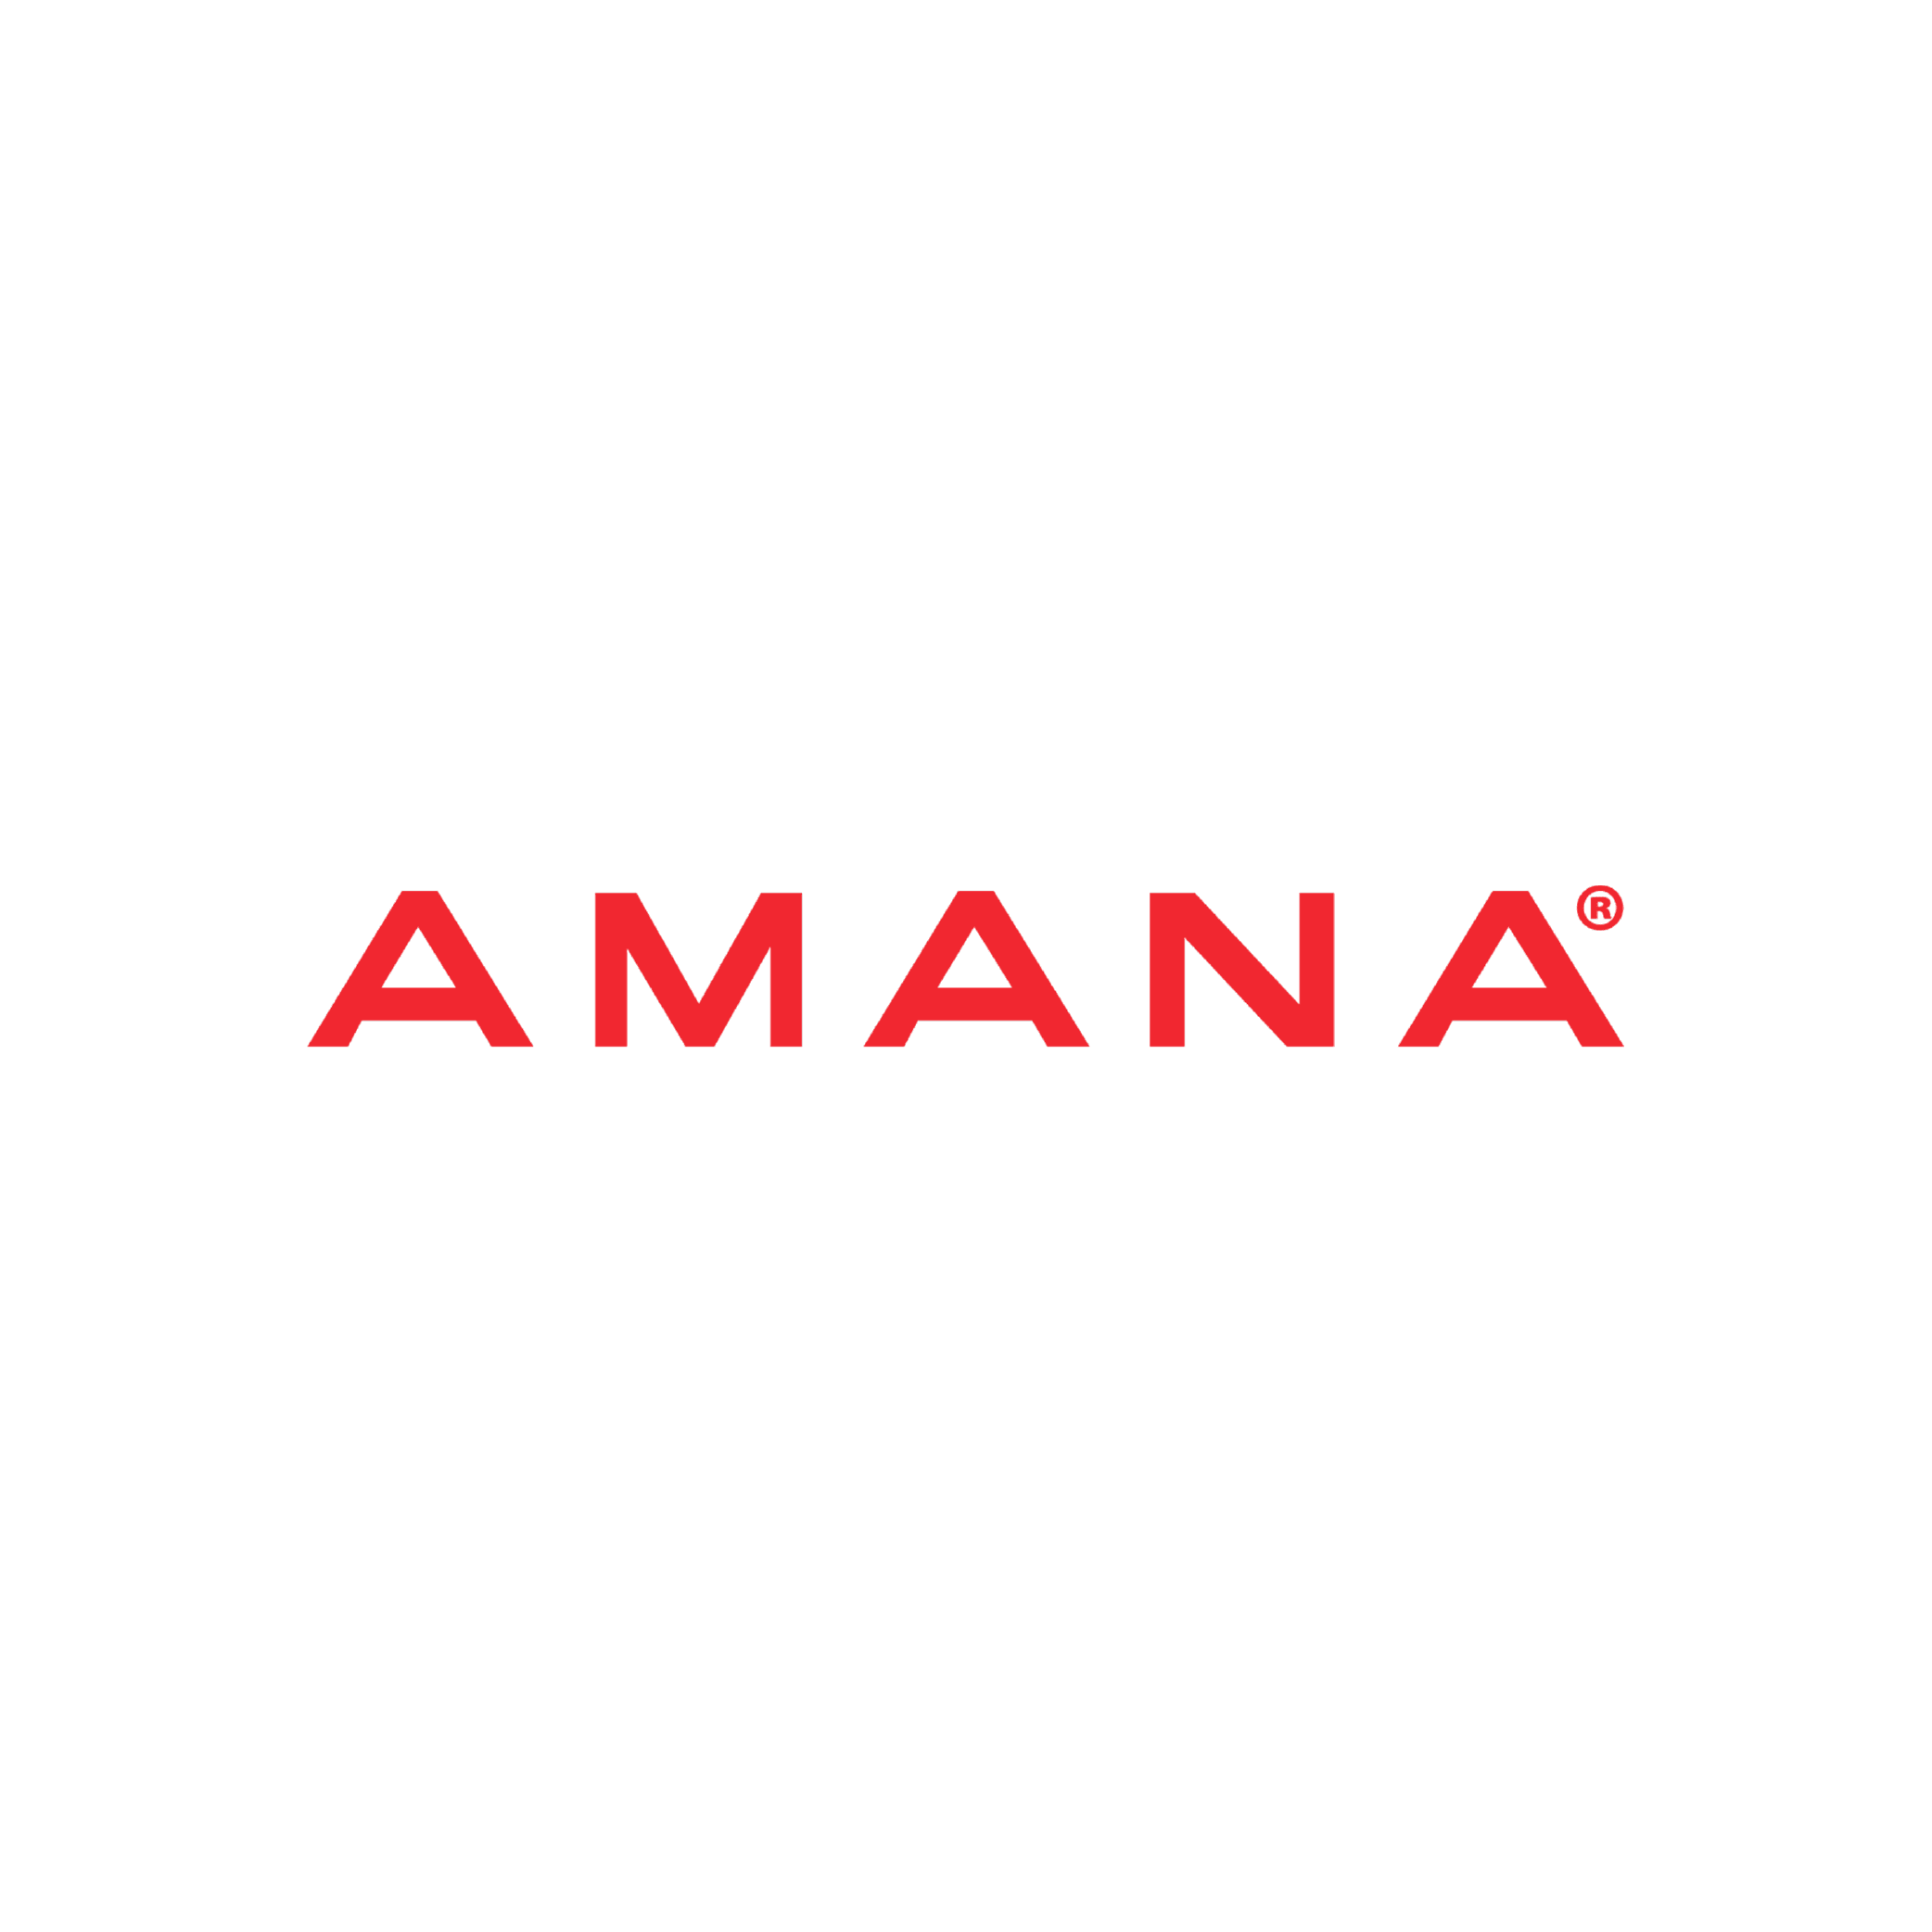  Amana Appliances Logo 